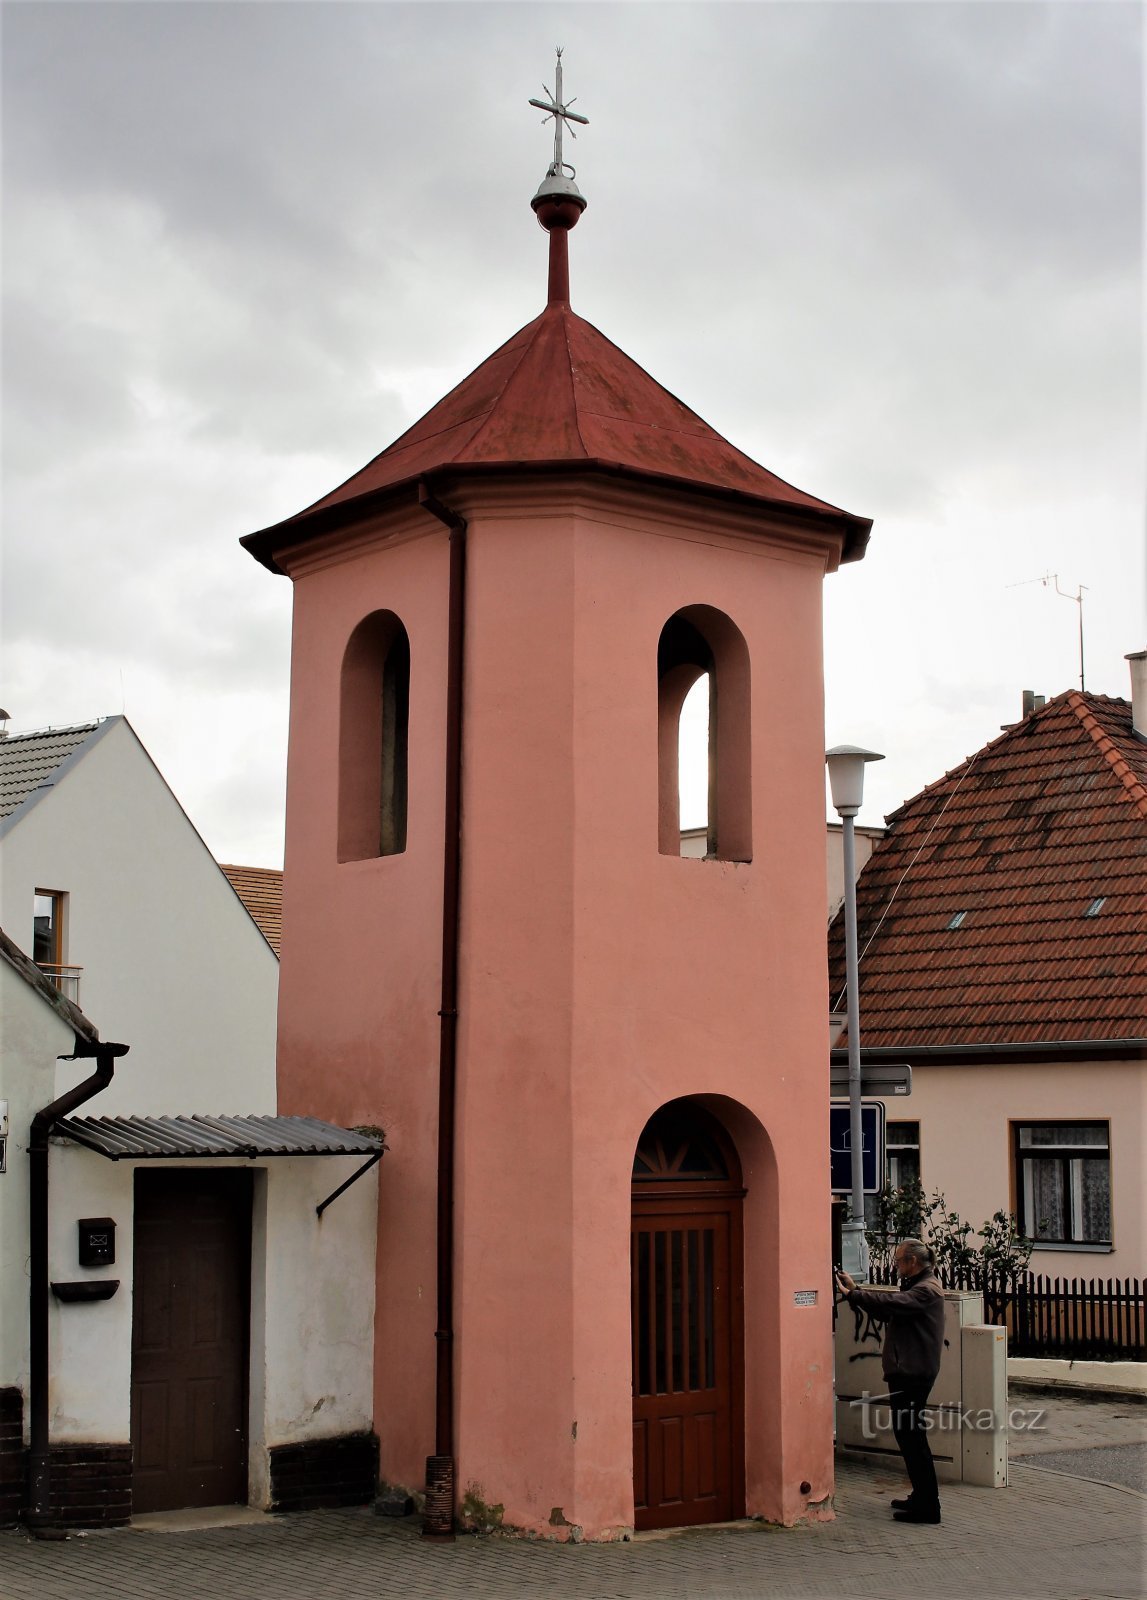 Brno-Medlánky - dzwonnica